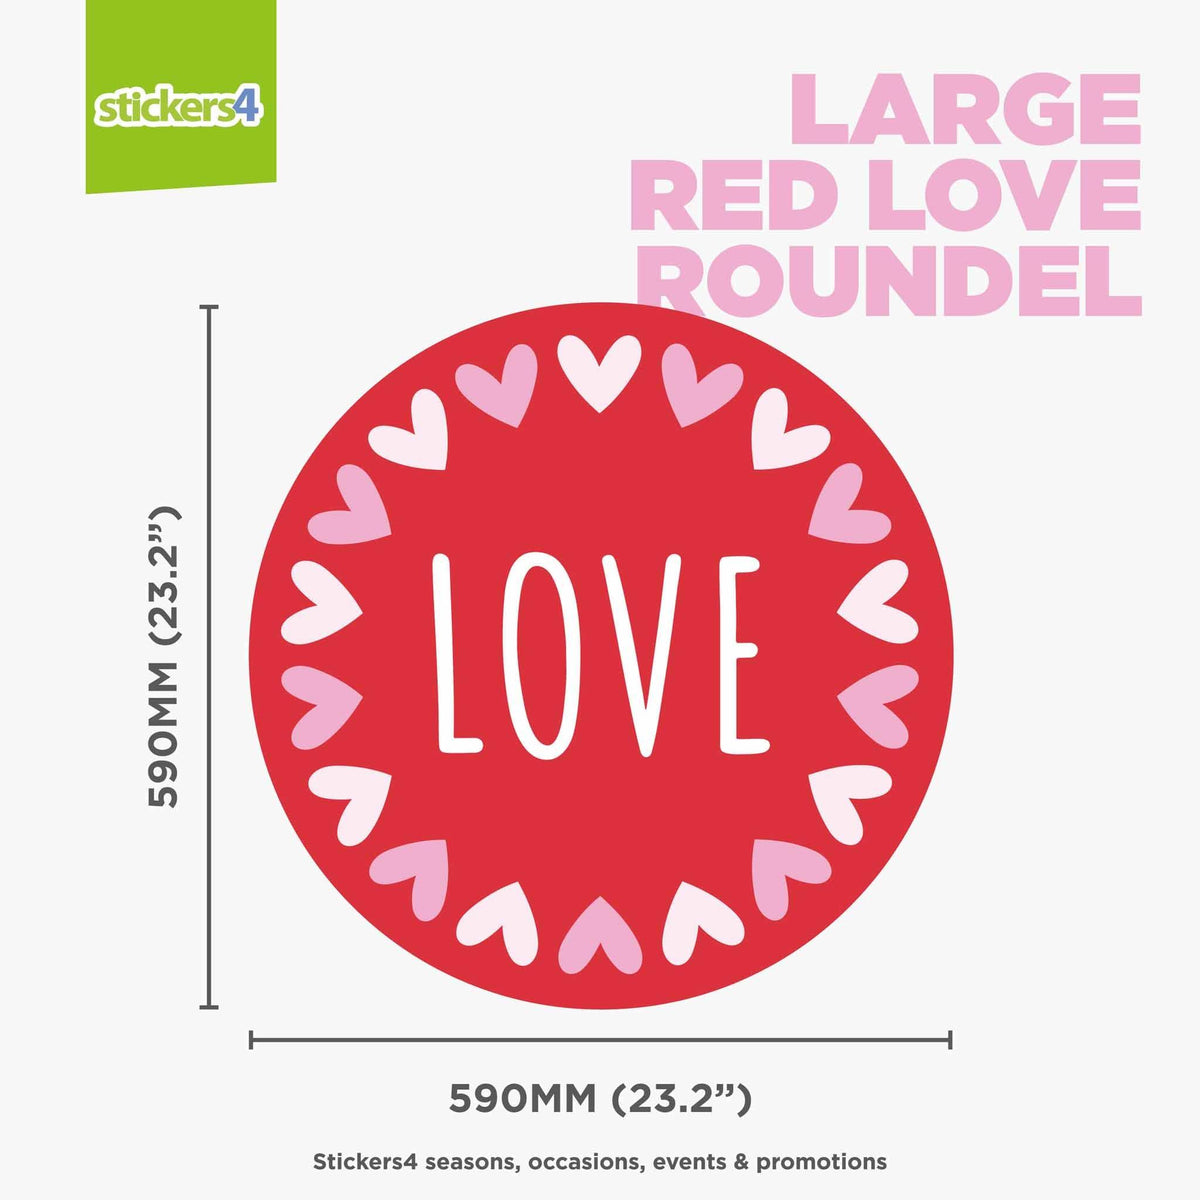 Red Love Roundel Window Sticker